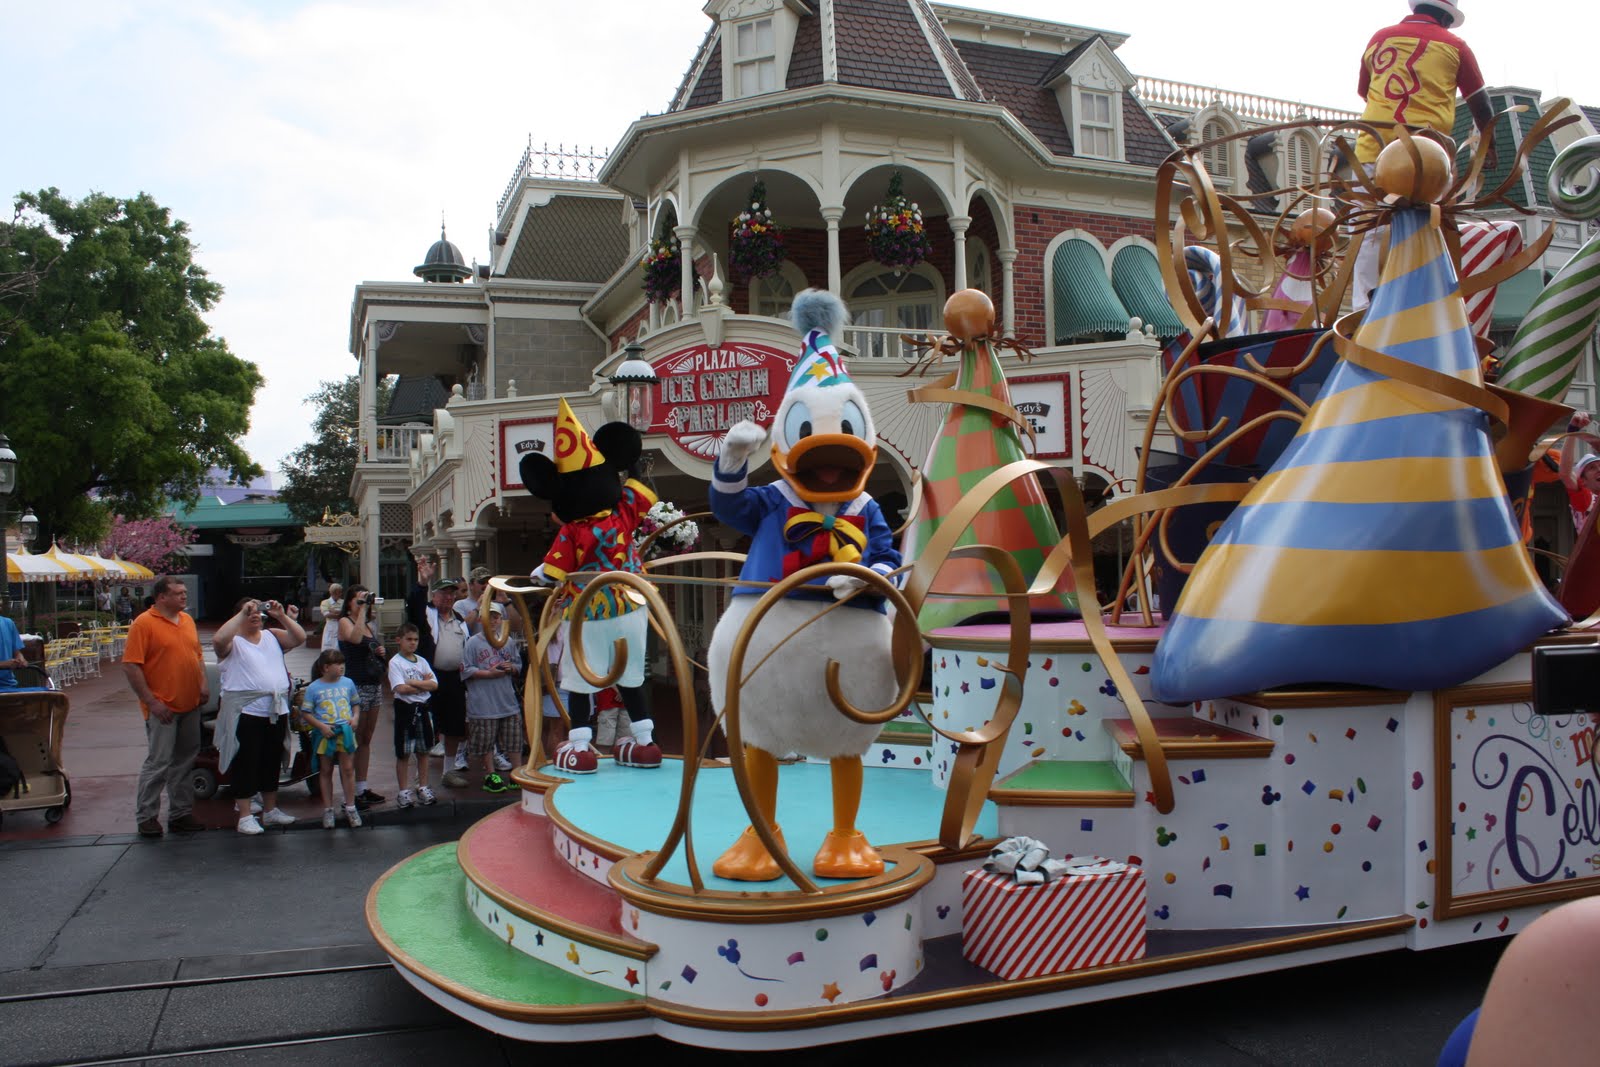 Joe & Brook: Walt Disney World, Magic Kingdom - Rides & Attractions